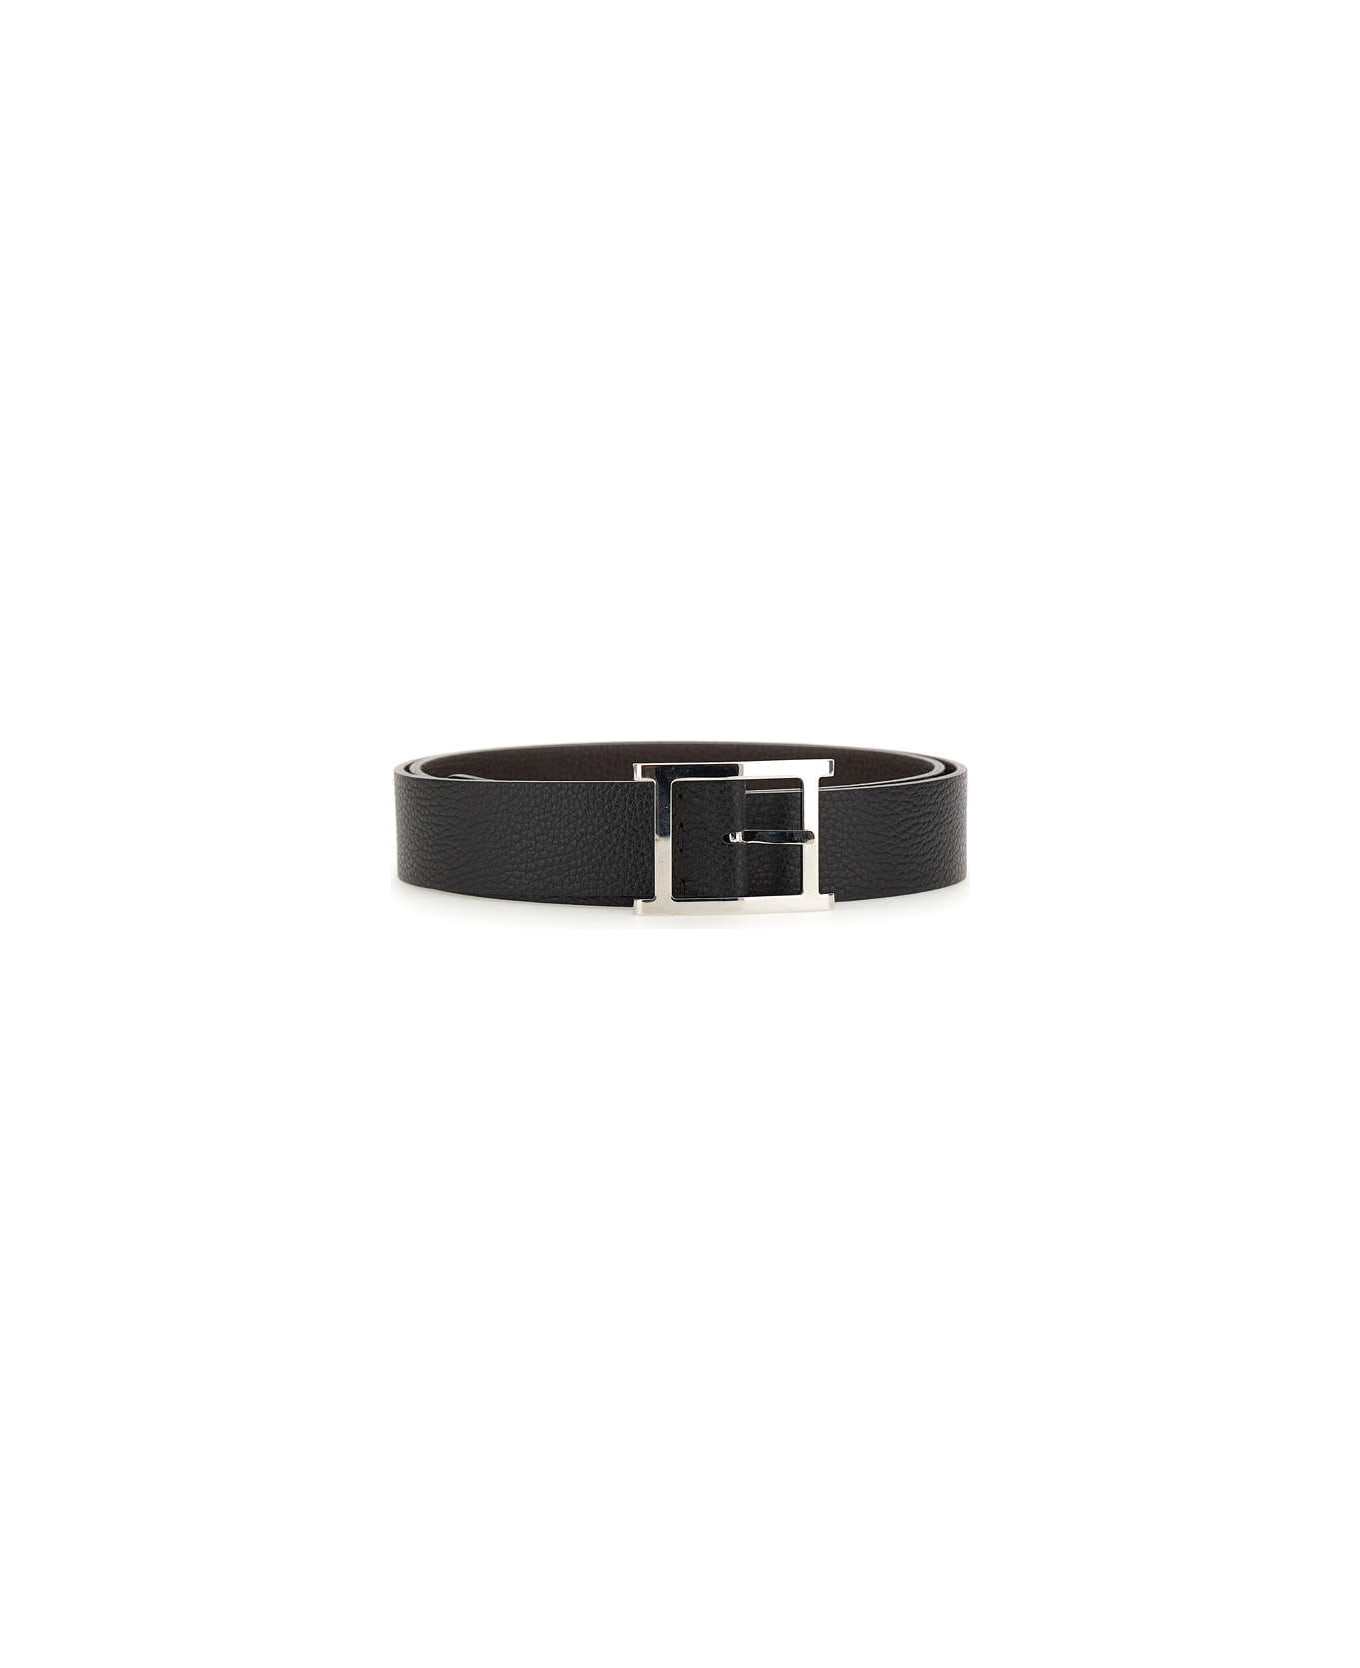 Orciani "micron Double" Belt - BLACK/BROWN ベルト